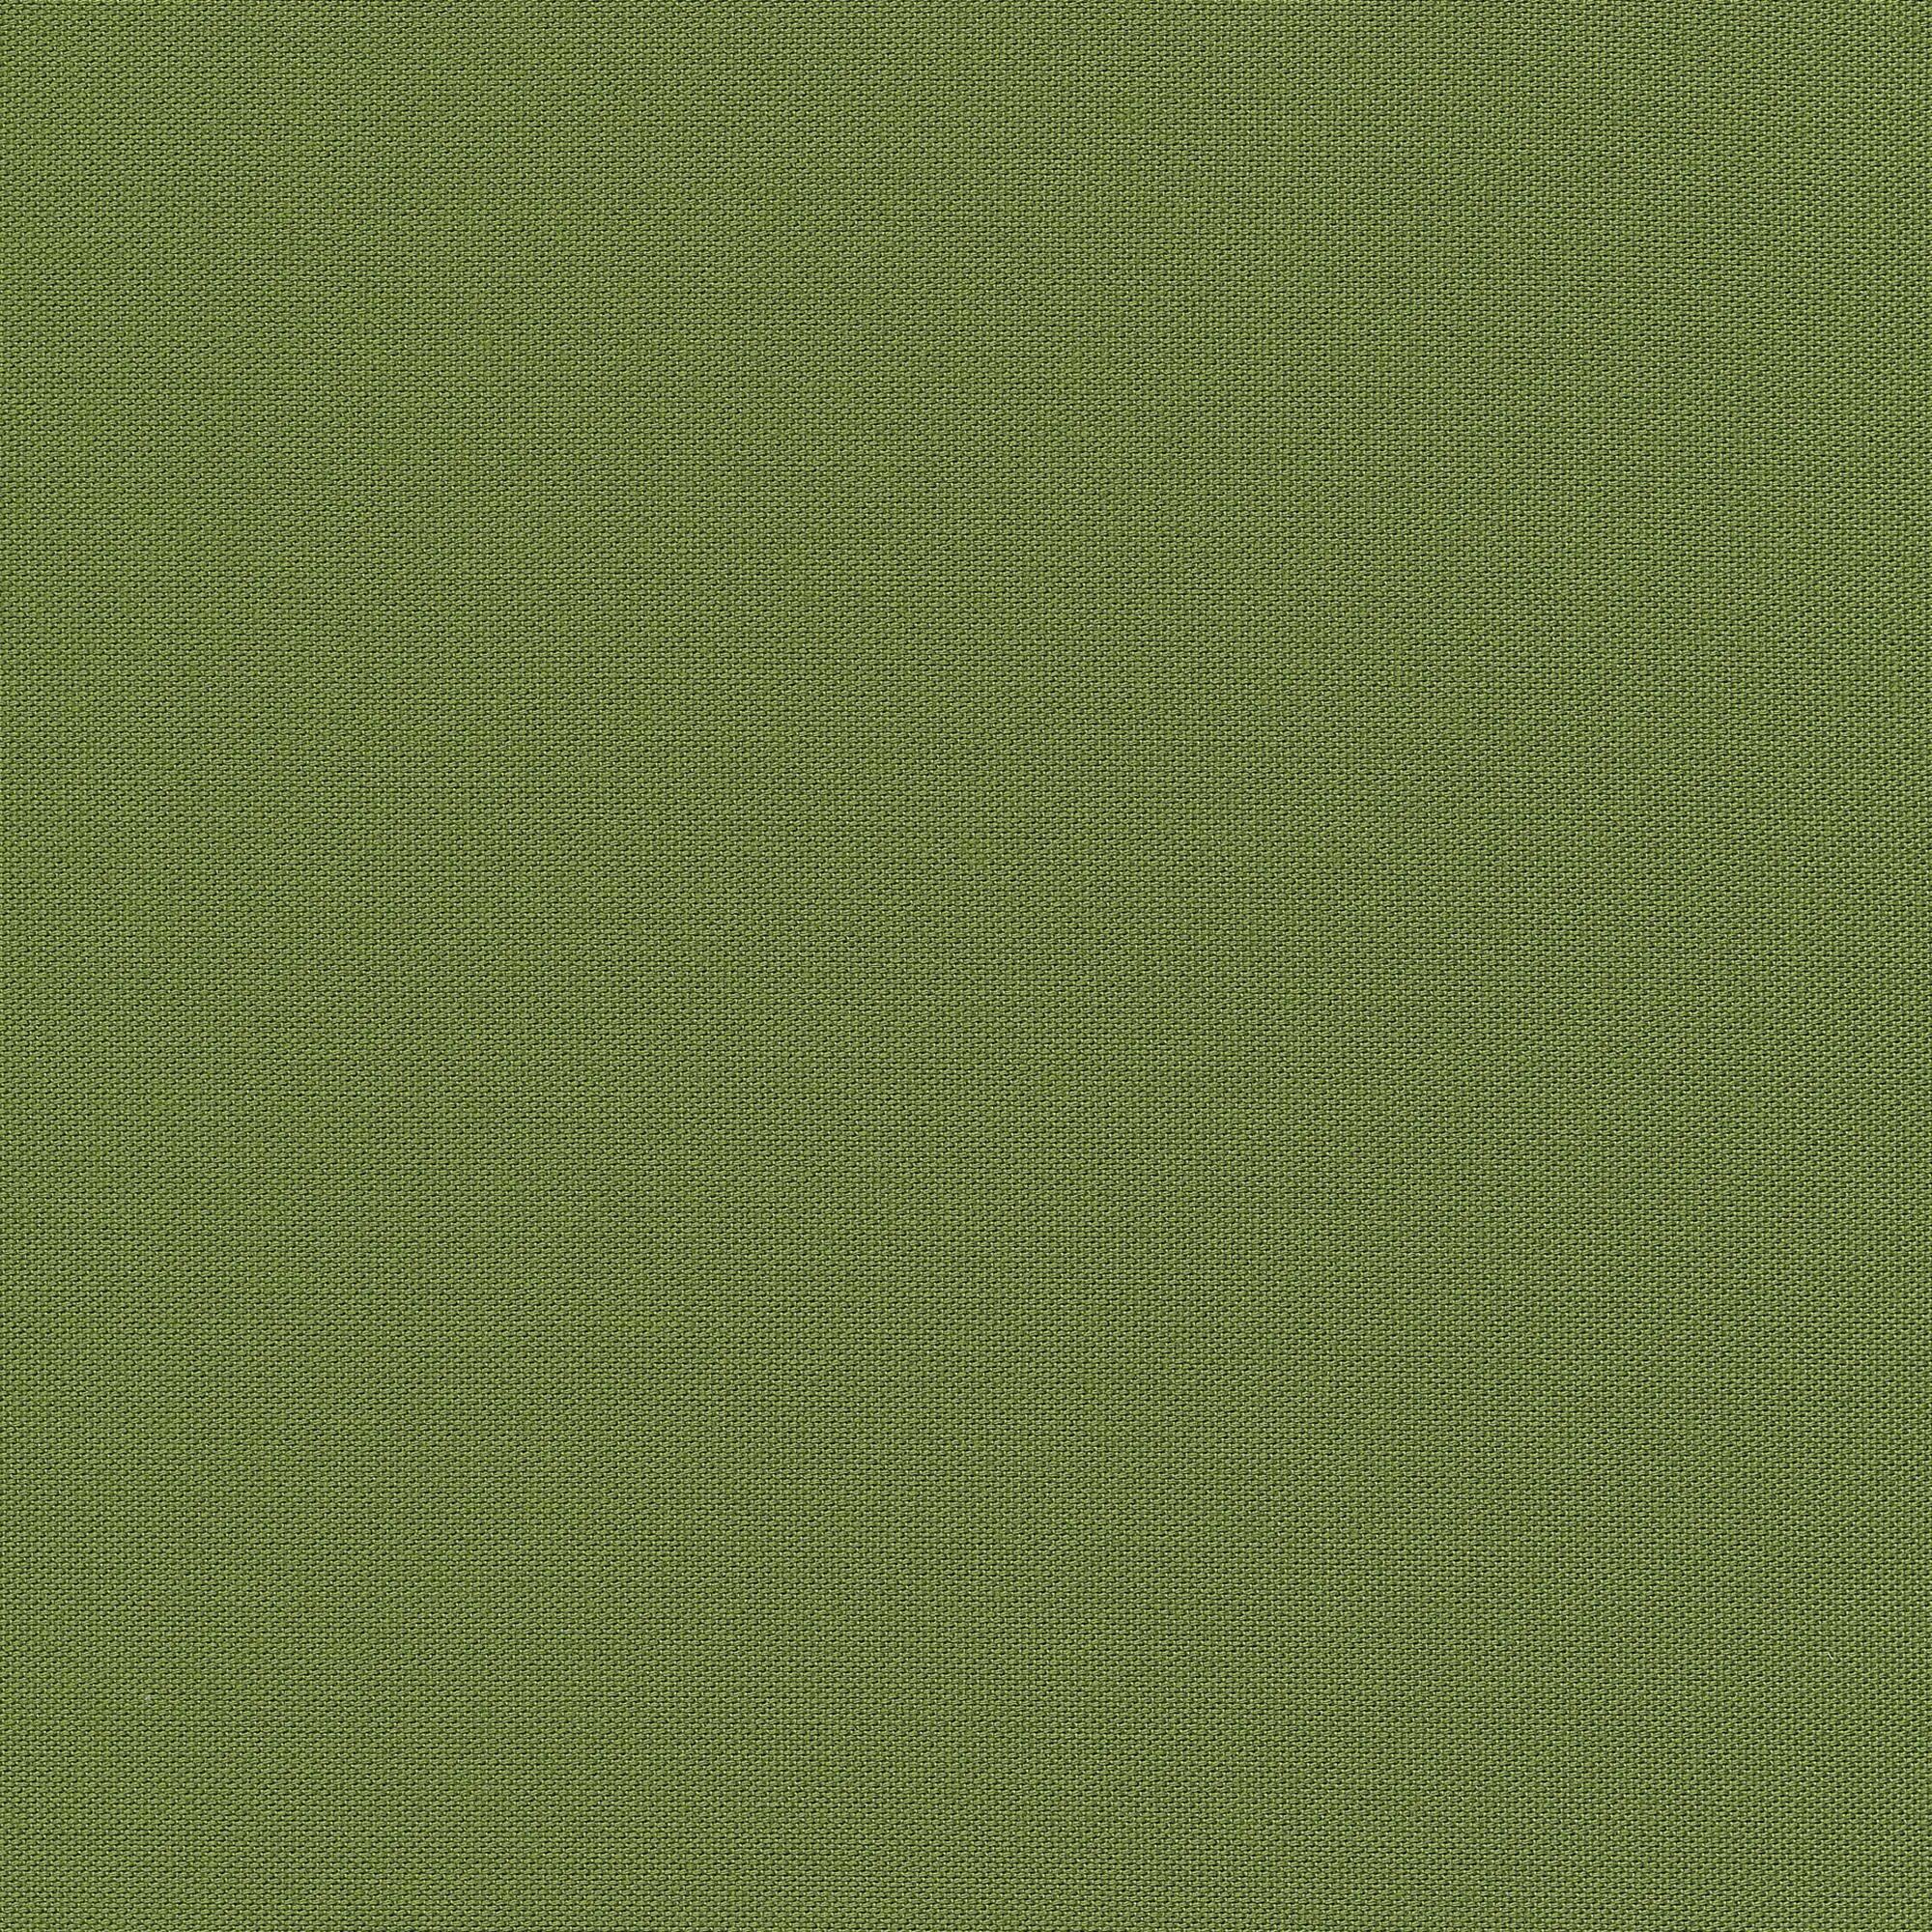 Tela al corte tapicería loneta anna verde ancho 280 cm